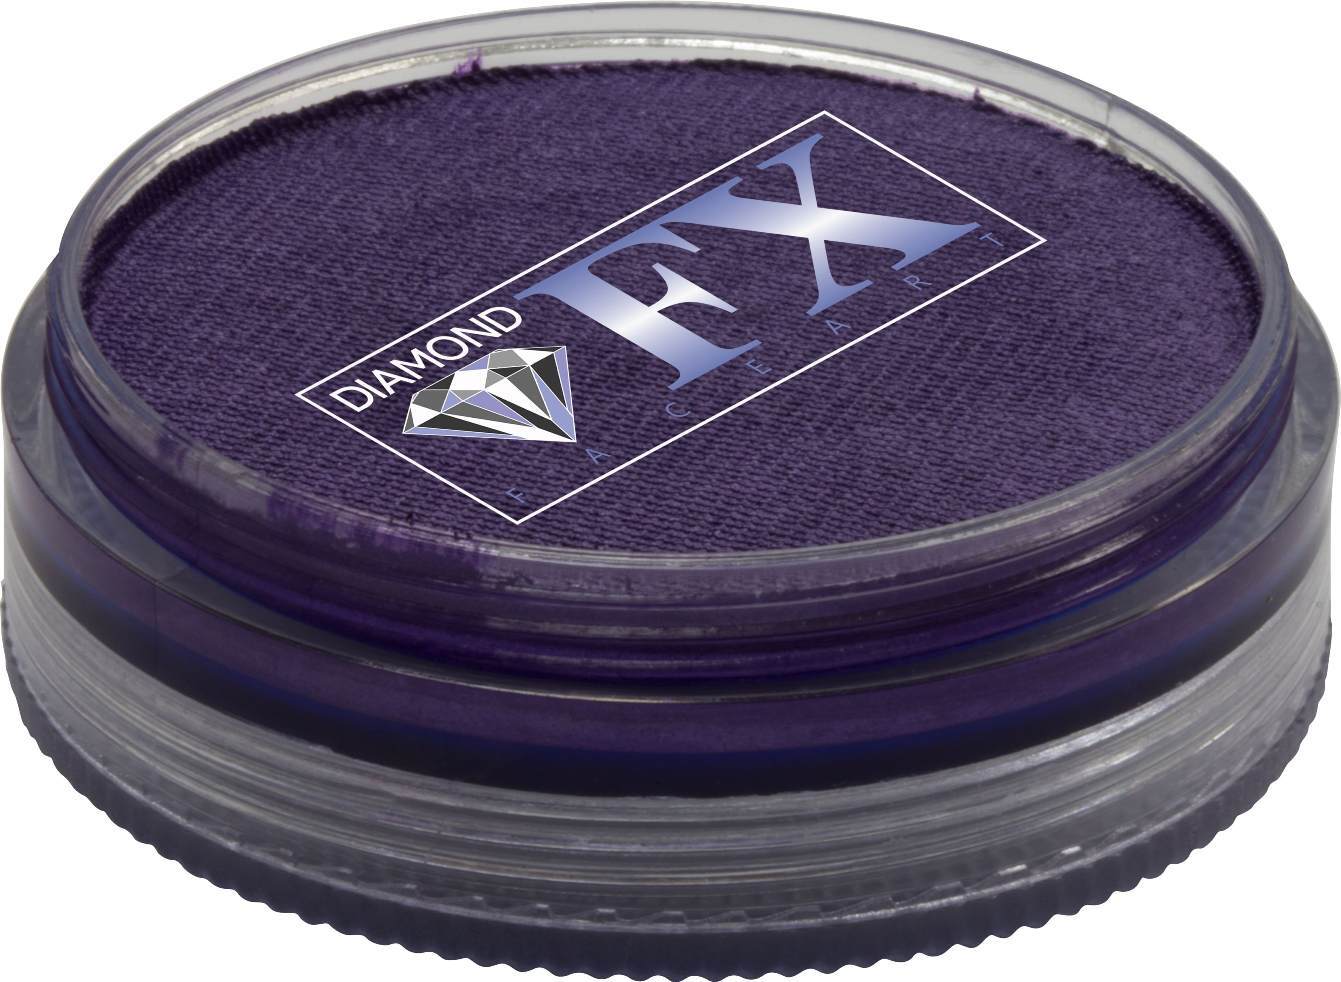 Diamond FX Purple Metallic 45g - Small Image